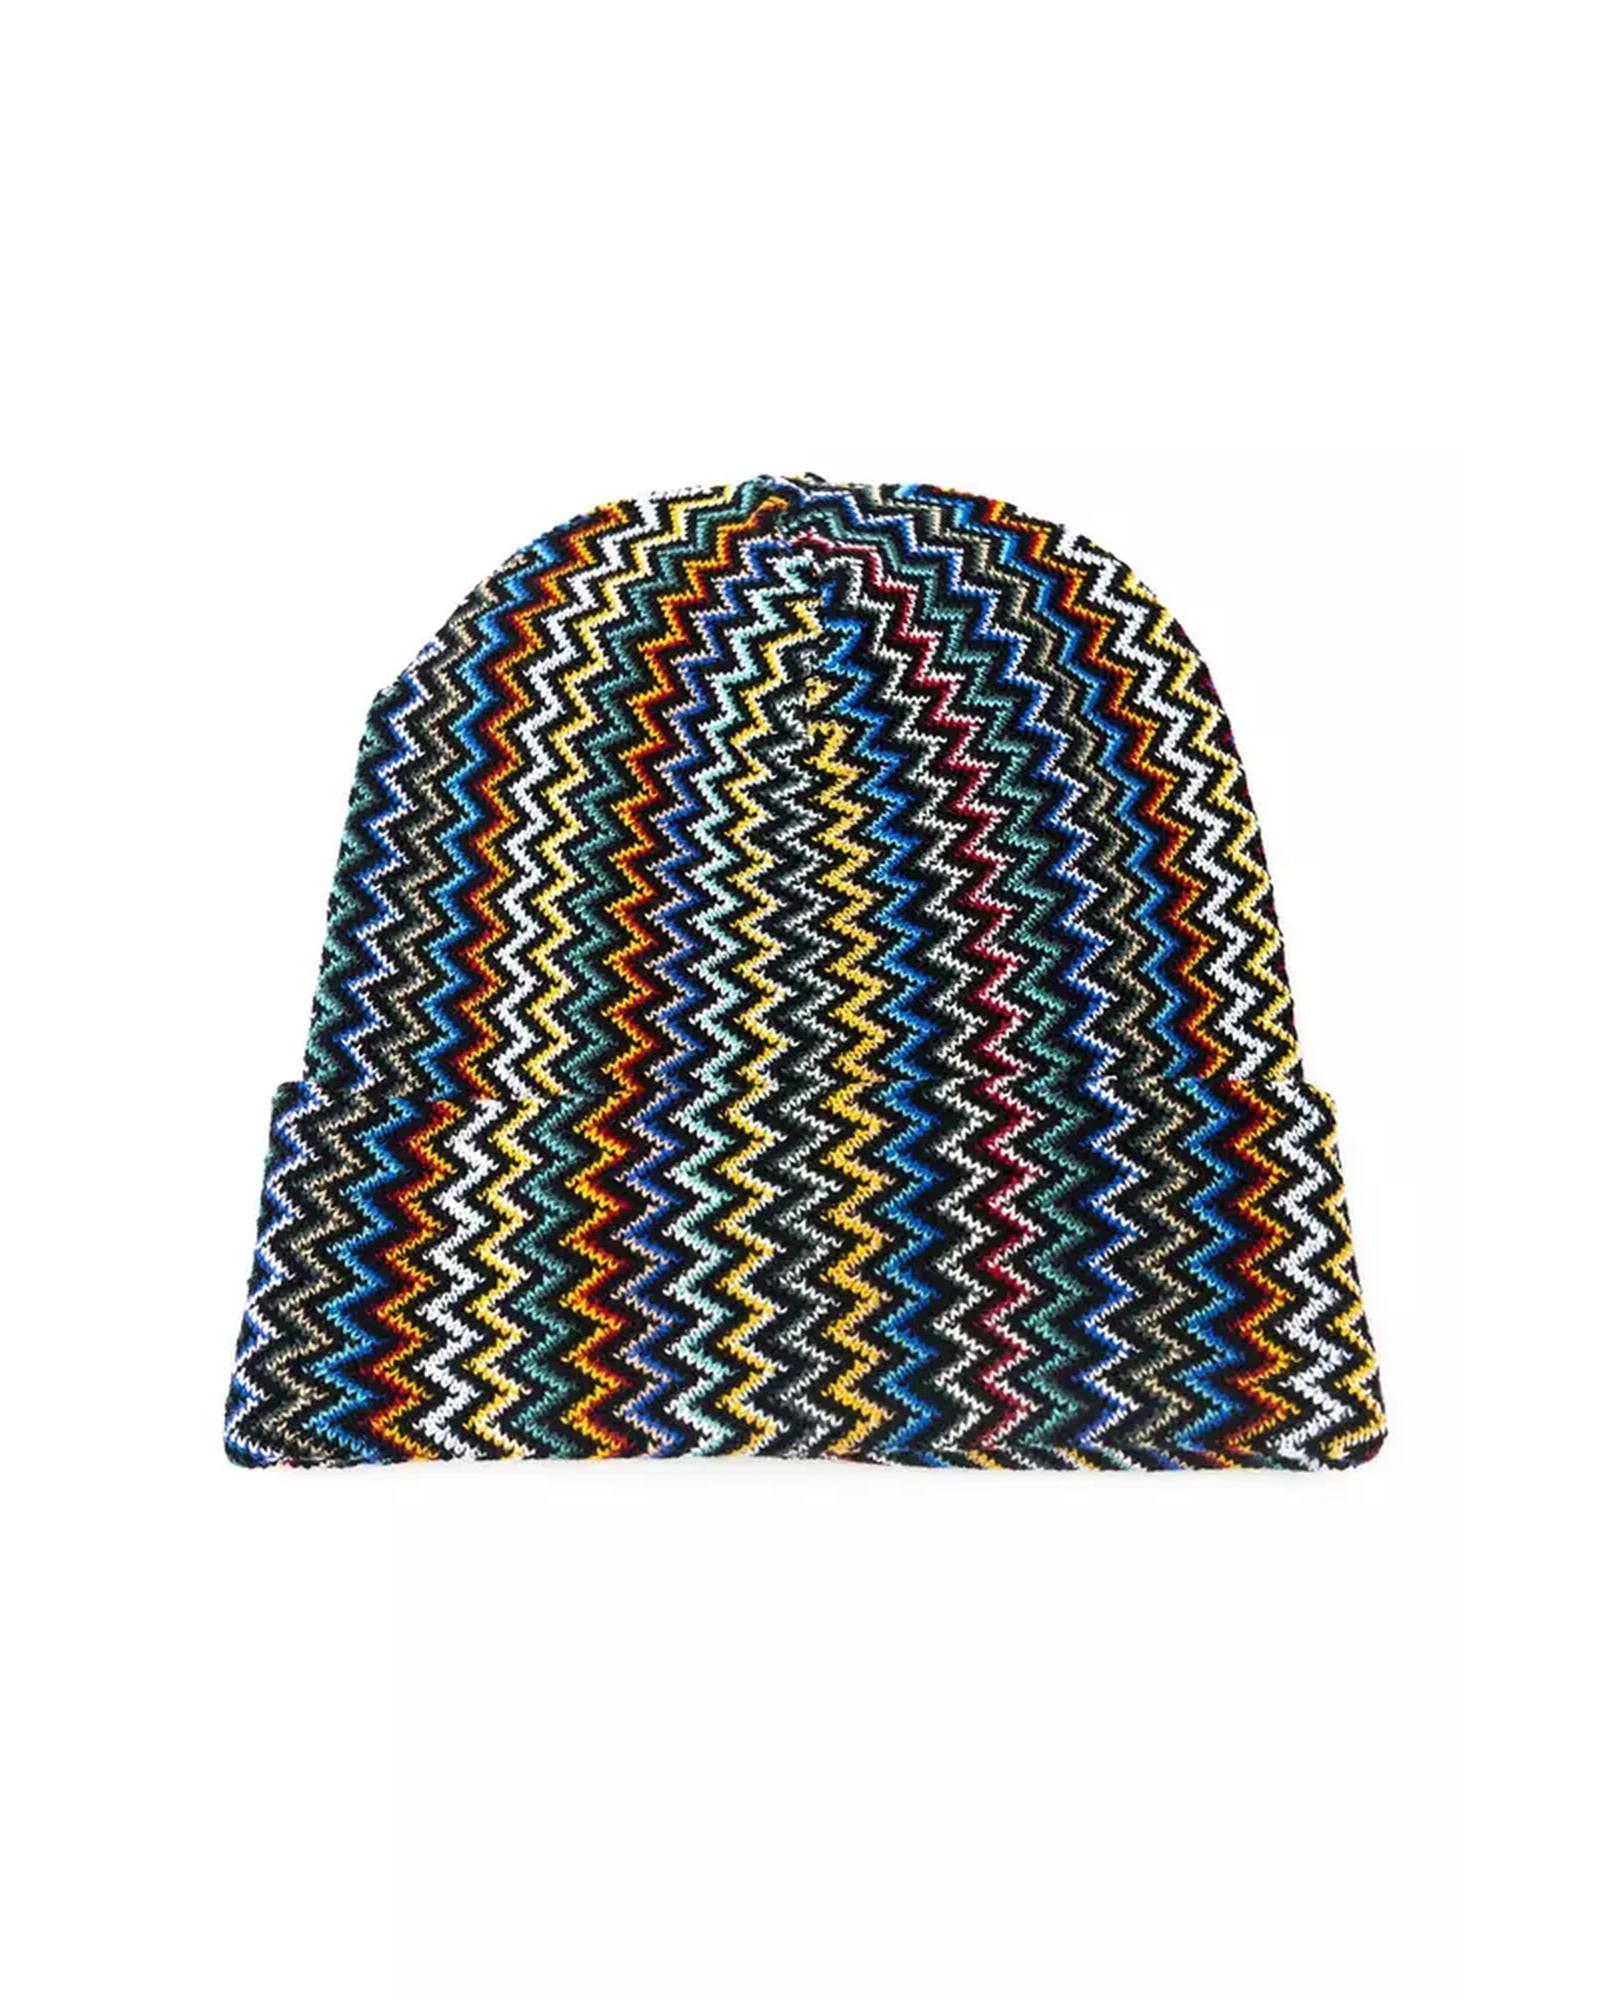 Geometric Fantasy Multicolor Hat One Size Men